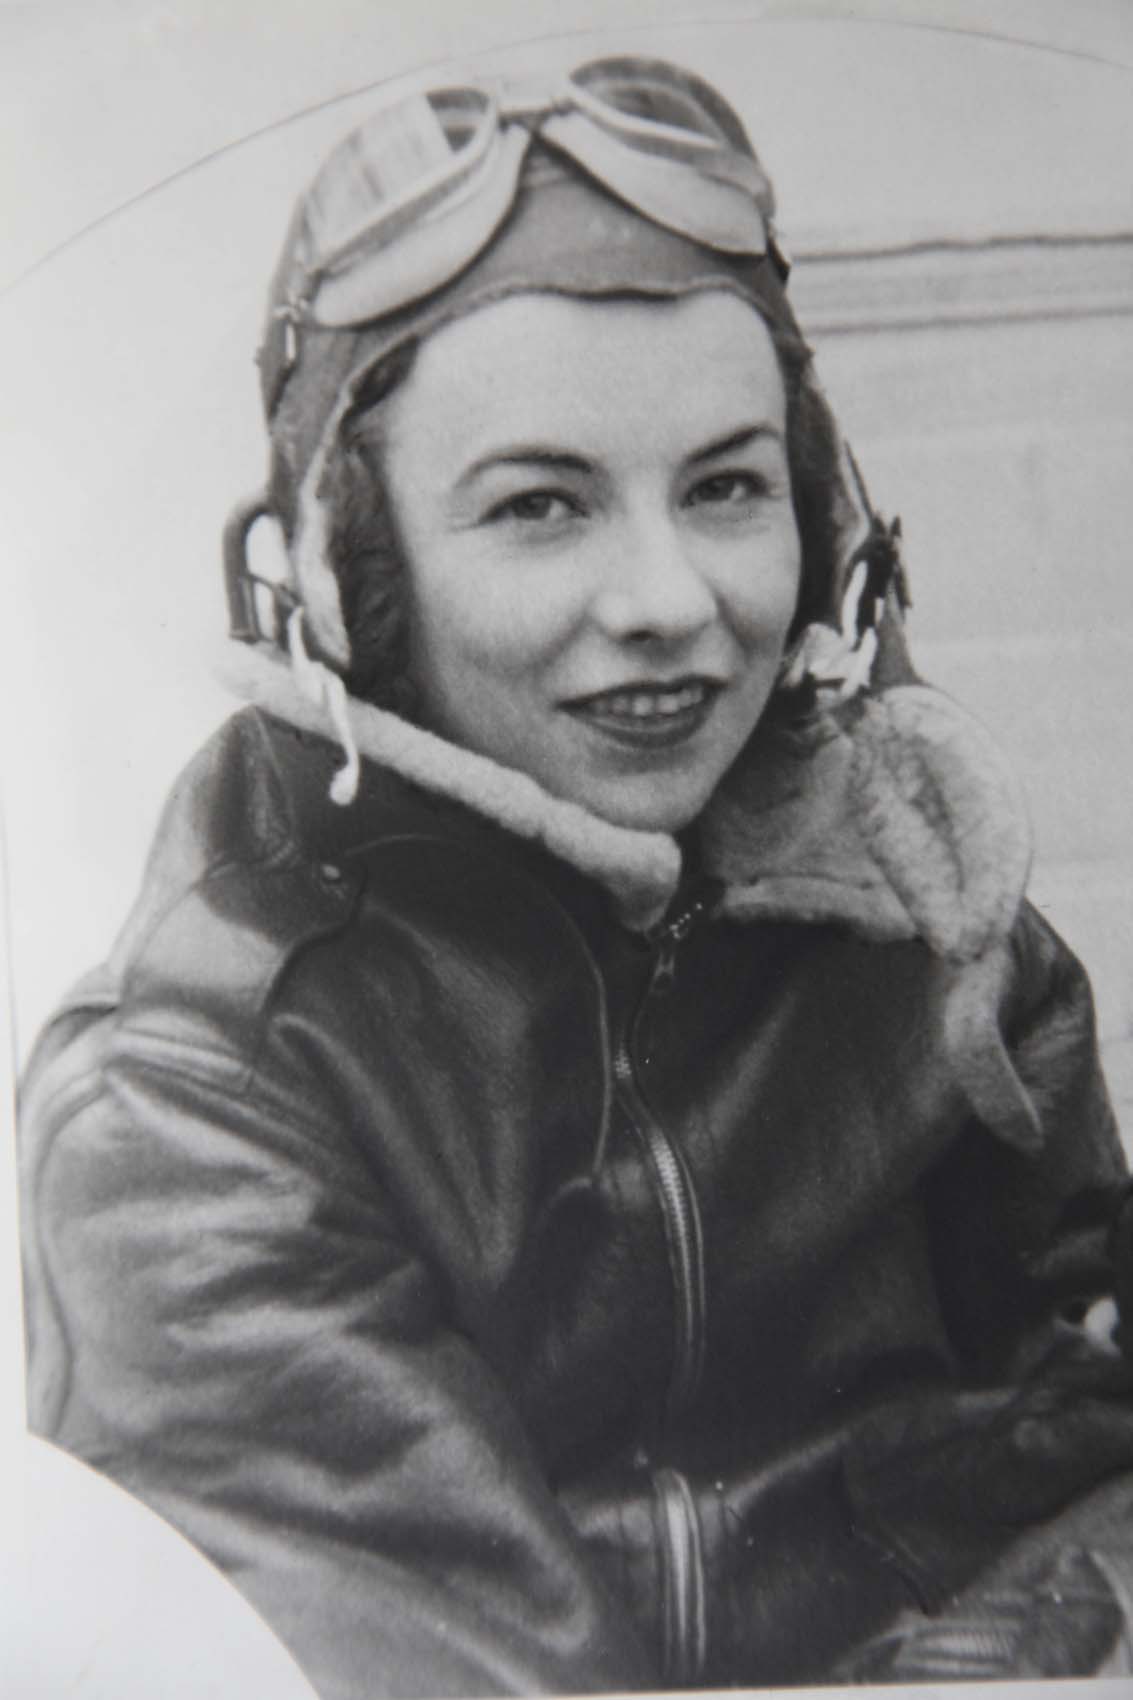 Mary Lou in full pilot's gear